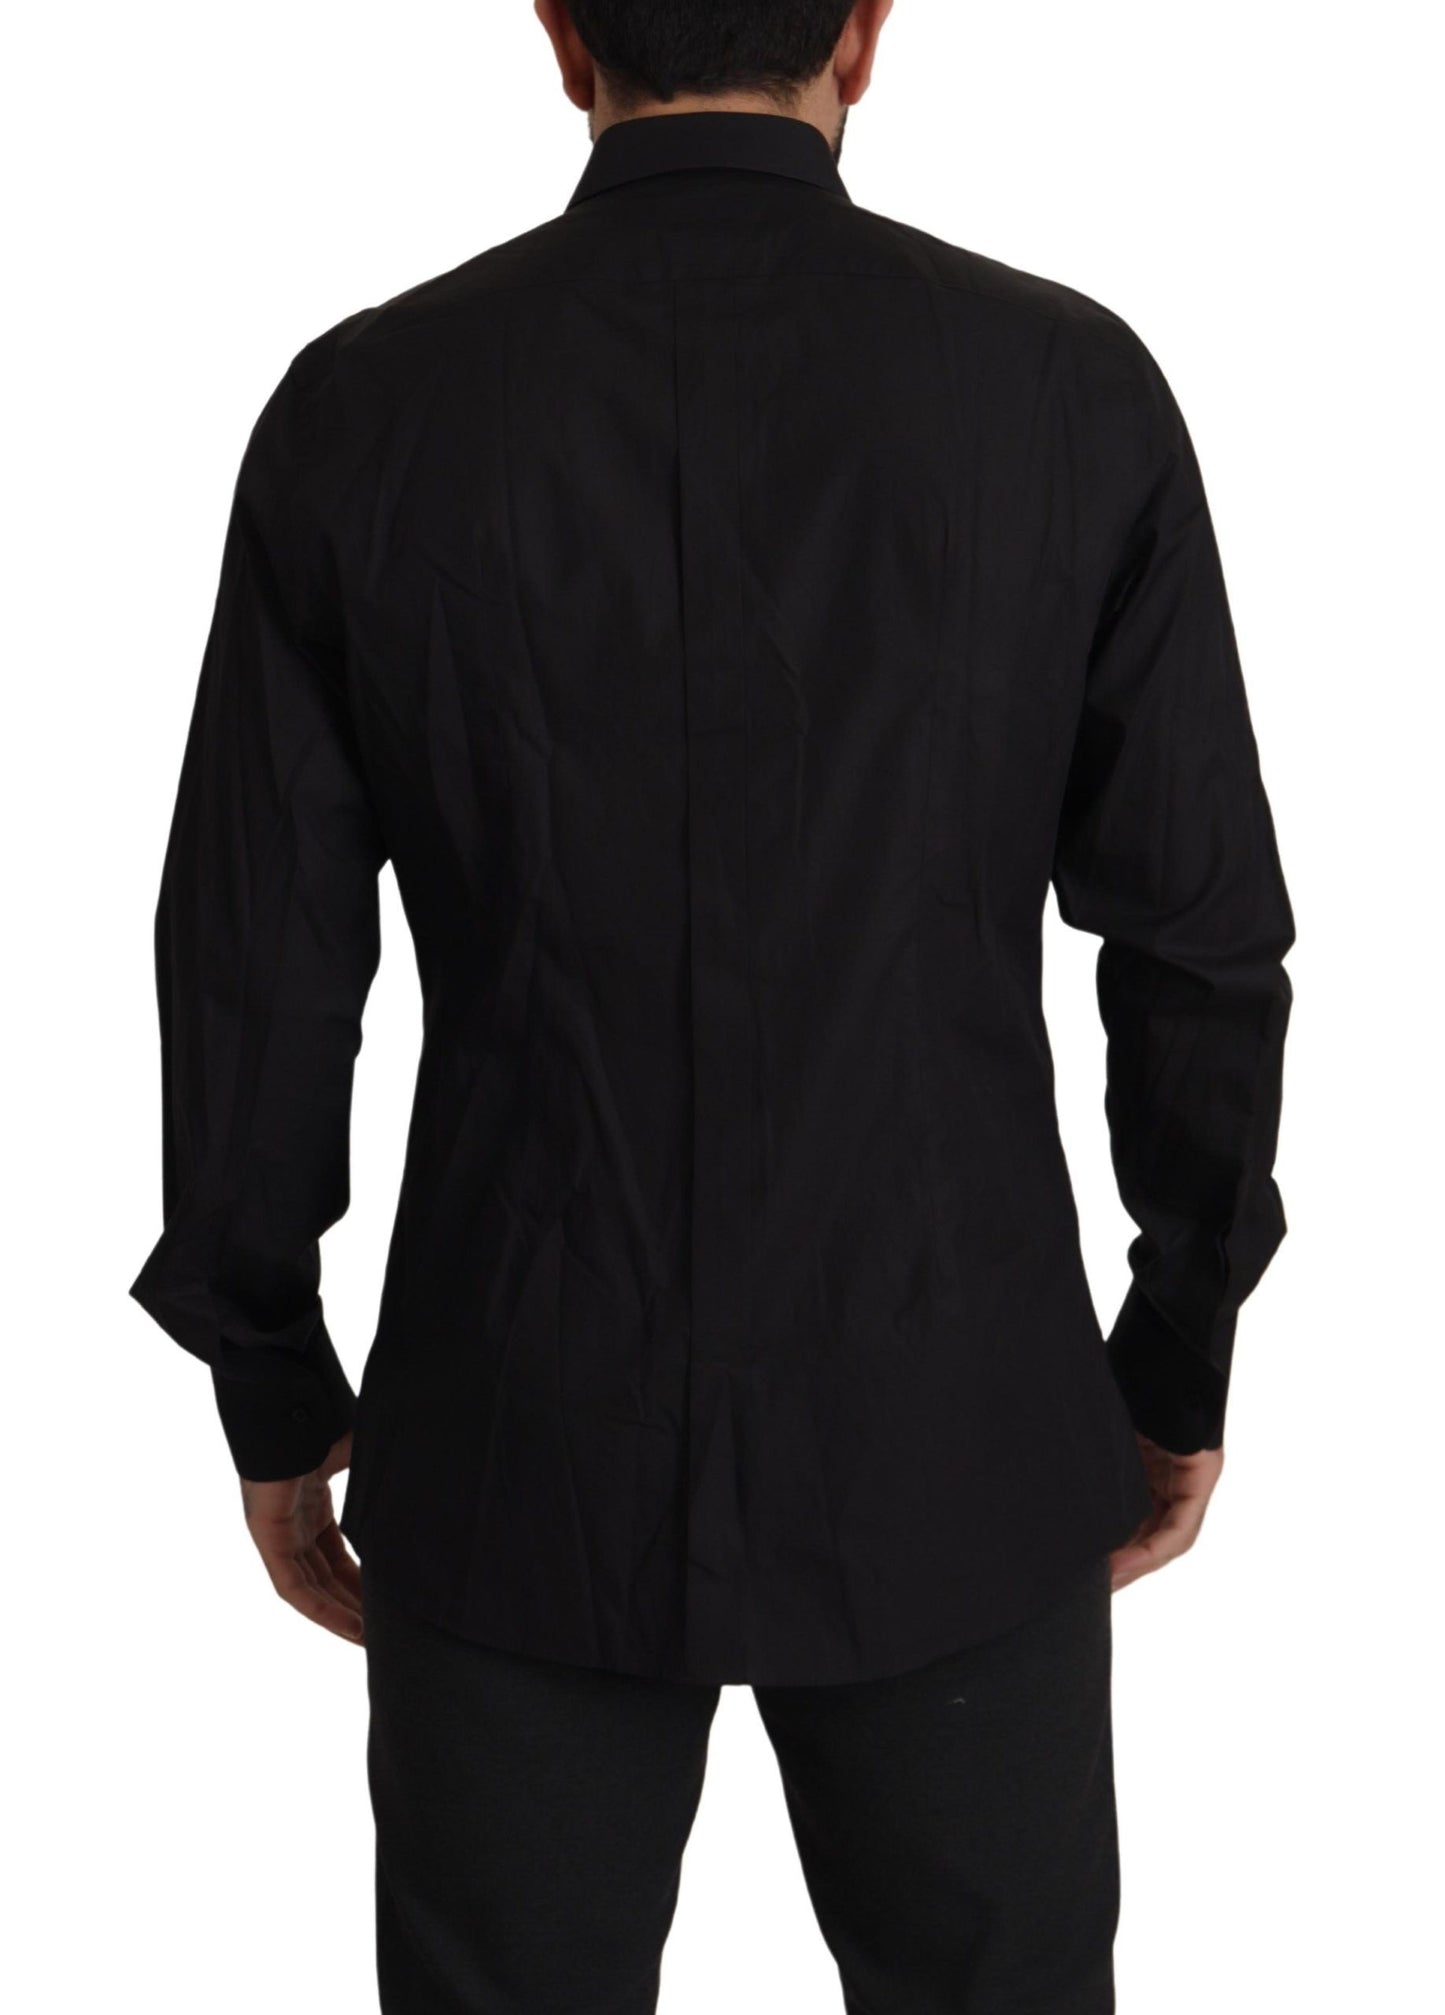 Sleek Black Tuxedo Dress Shirt - Slim Fit